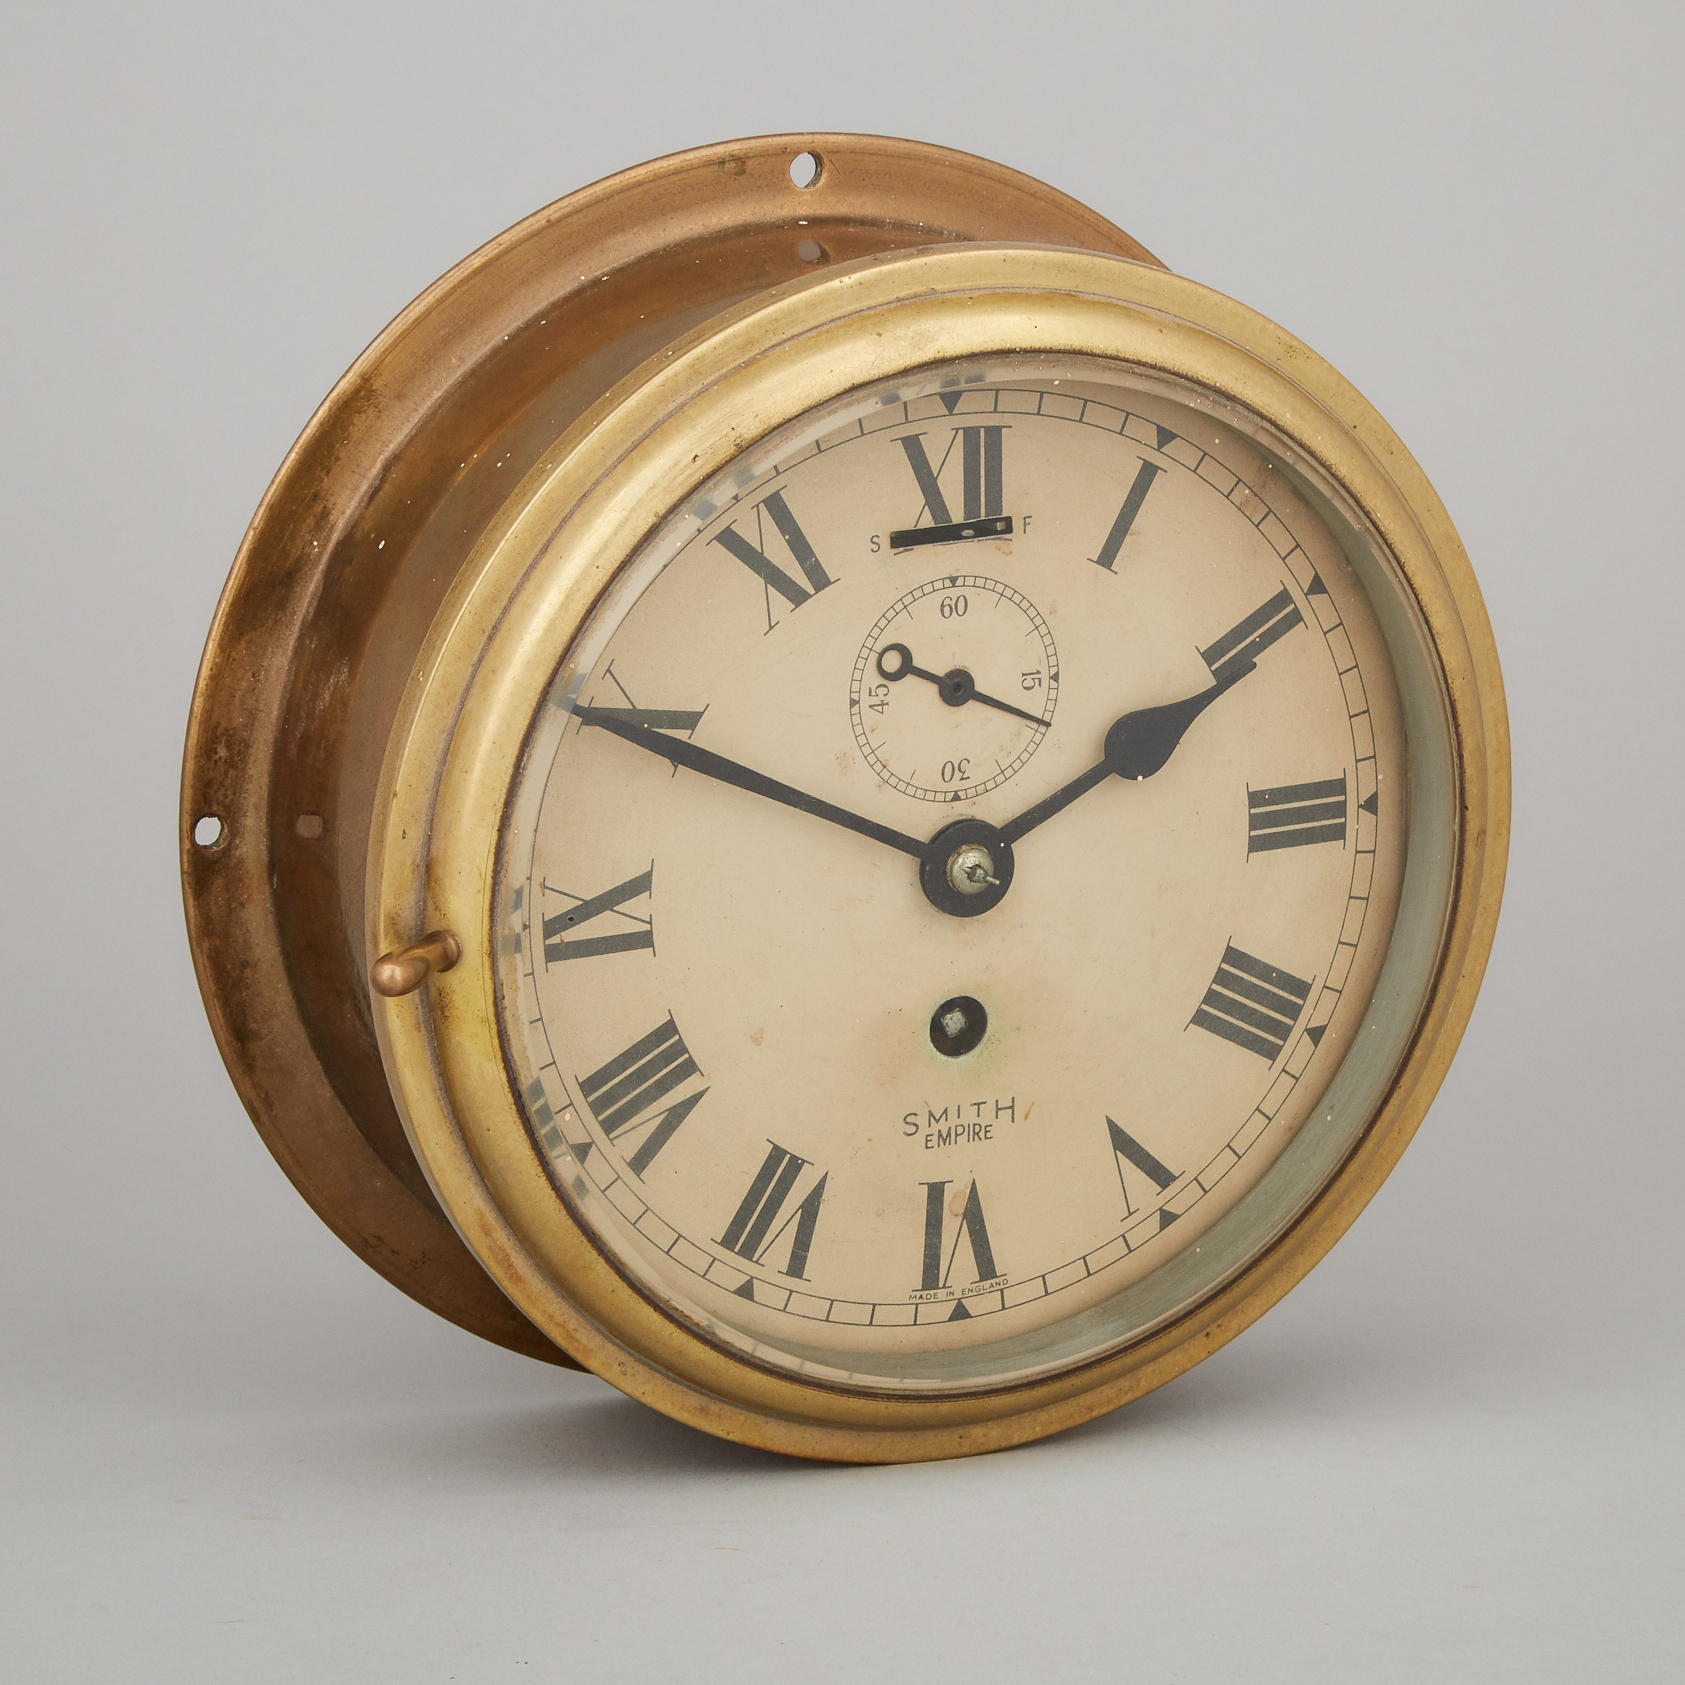 Smith Empire Brass Marine Chronometer, early/mid 20th century